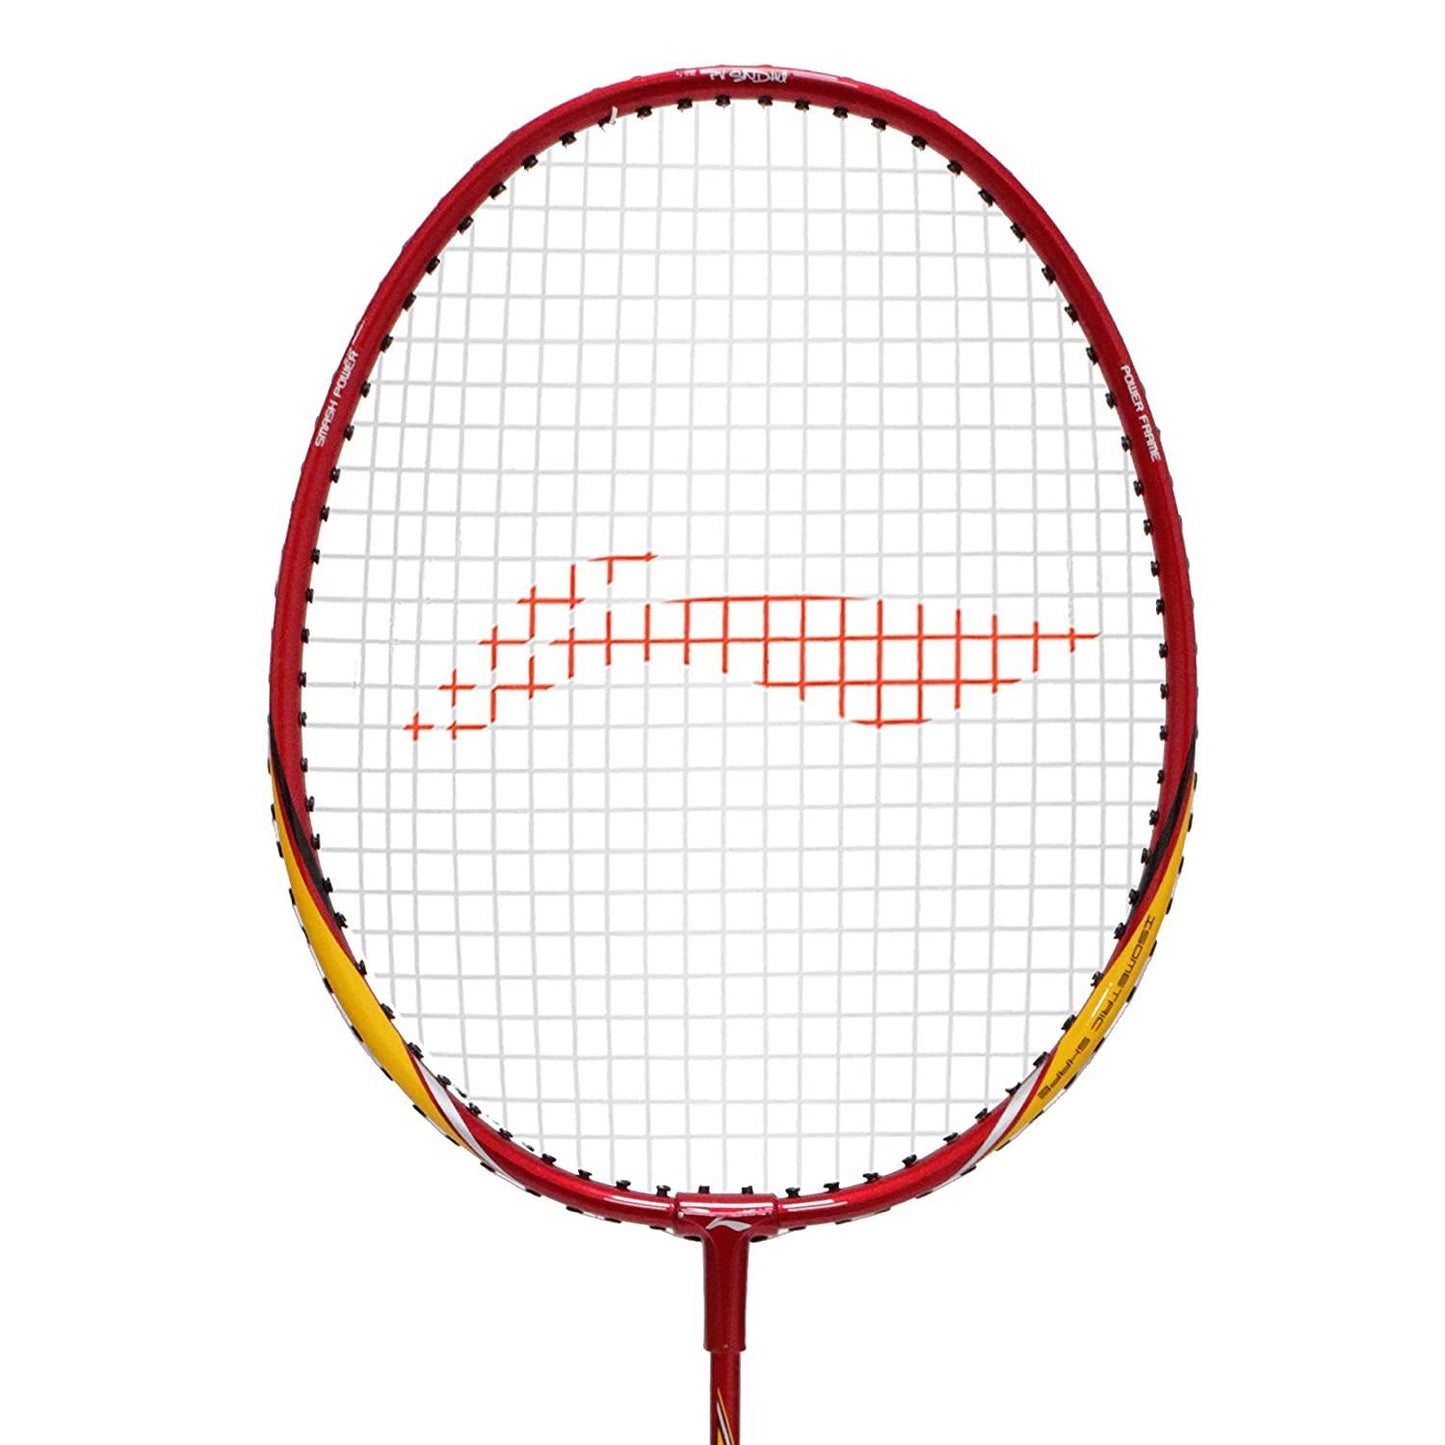 Li-Ning XP 900 Junior Badminton Racquet for Age 4 Yrs to 10 Yrs - Red/Orange (Half Cover) - Best Price online Prokicksports.com